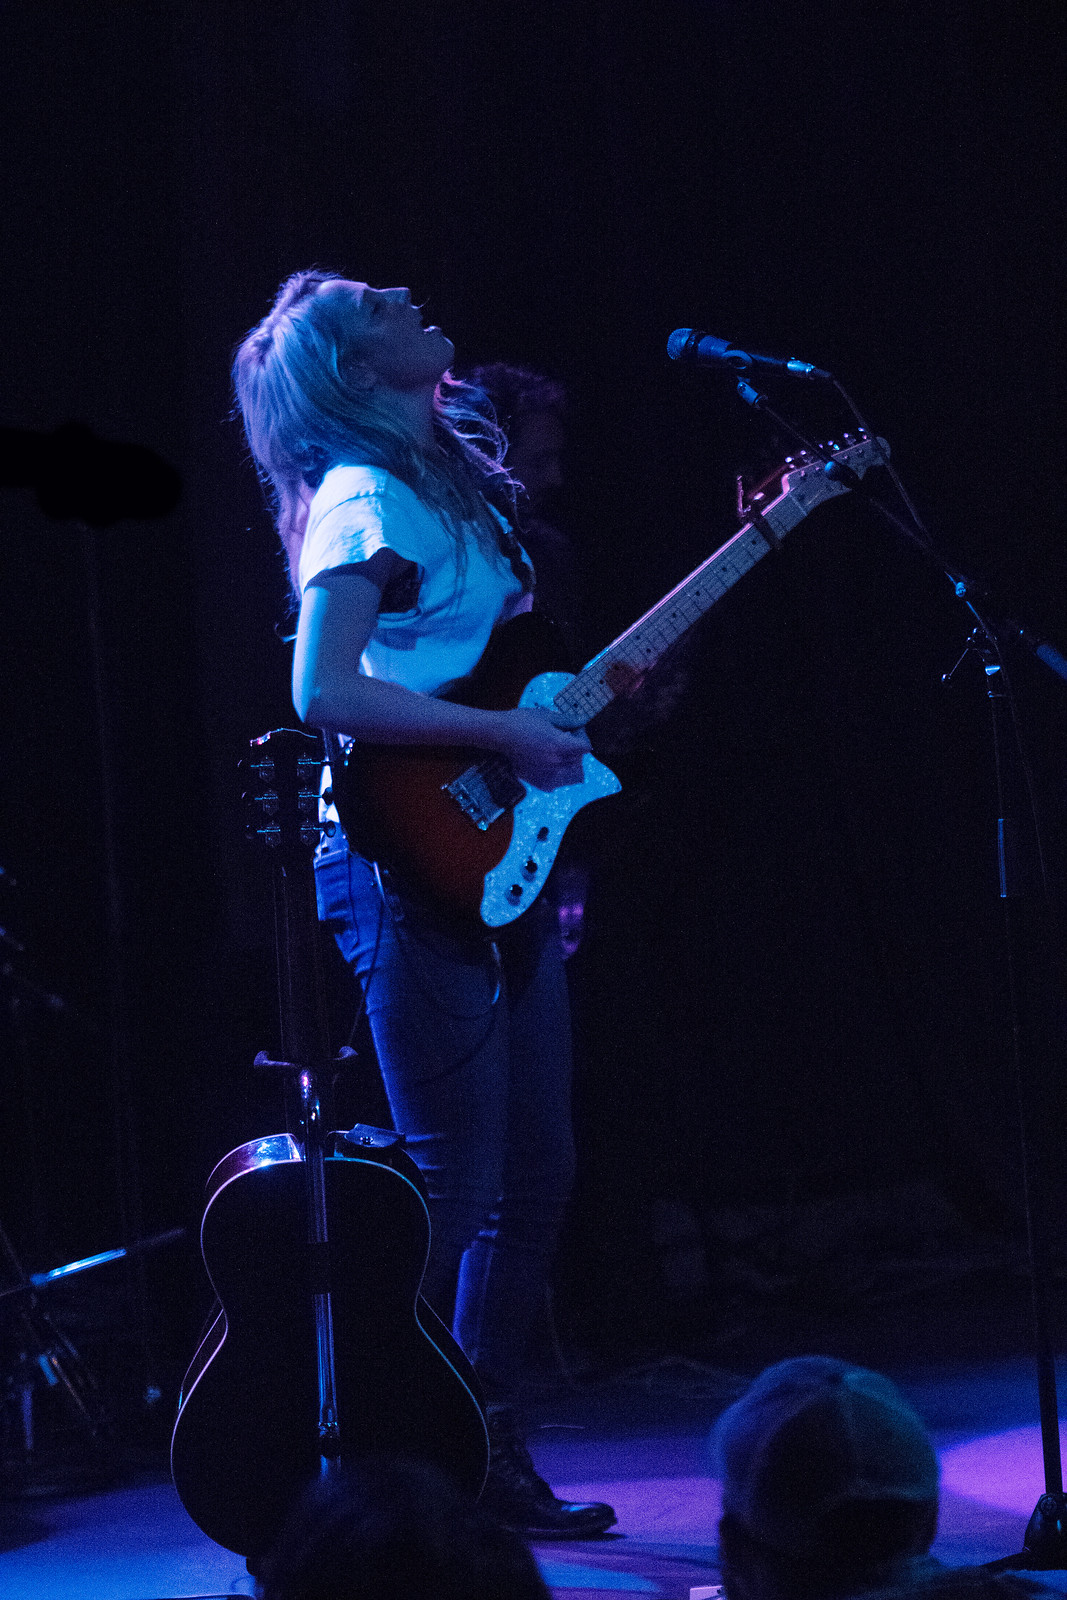 Lissie - concert photos from Denver 2016